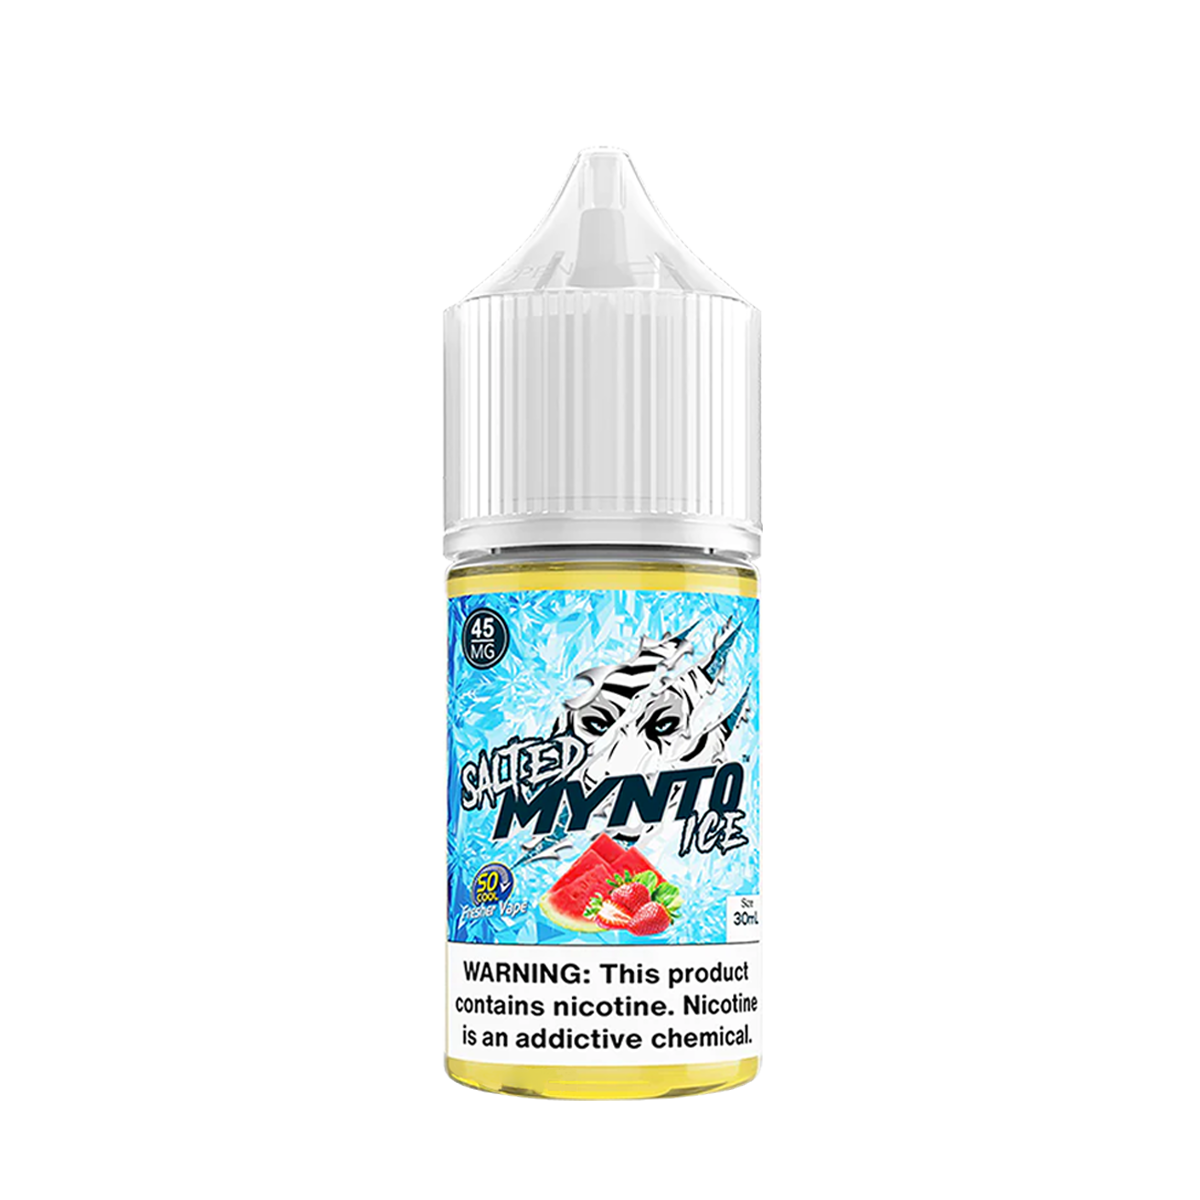 Suorin Mynto Ice Salt Nicotine Vape Juice 45 Mg 30 Ml Water Berry Ice